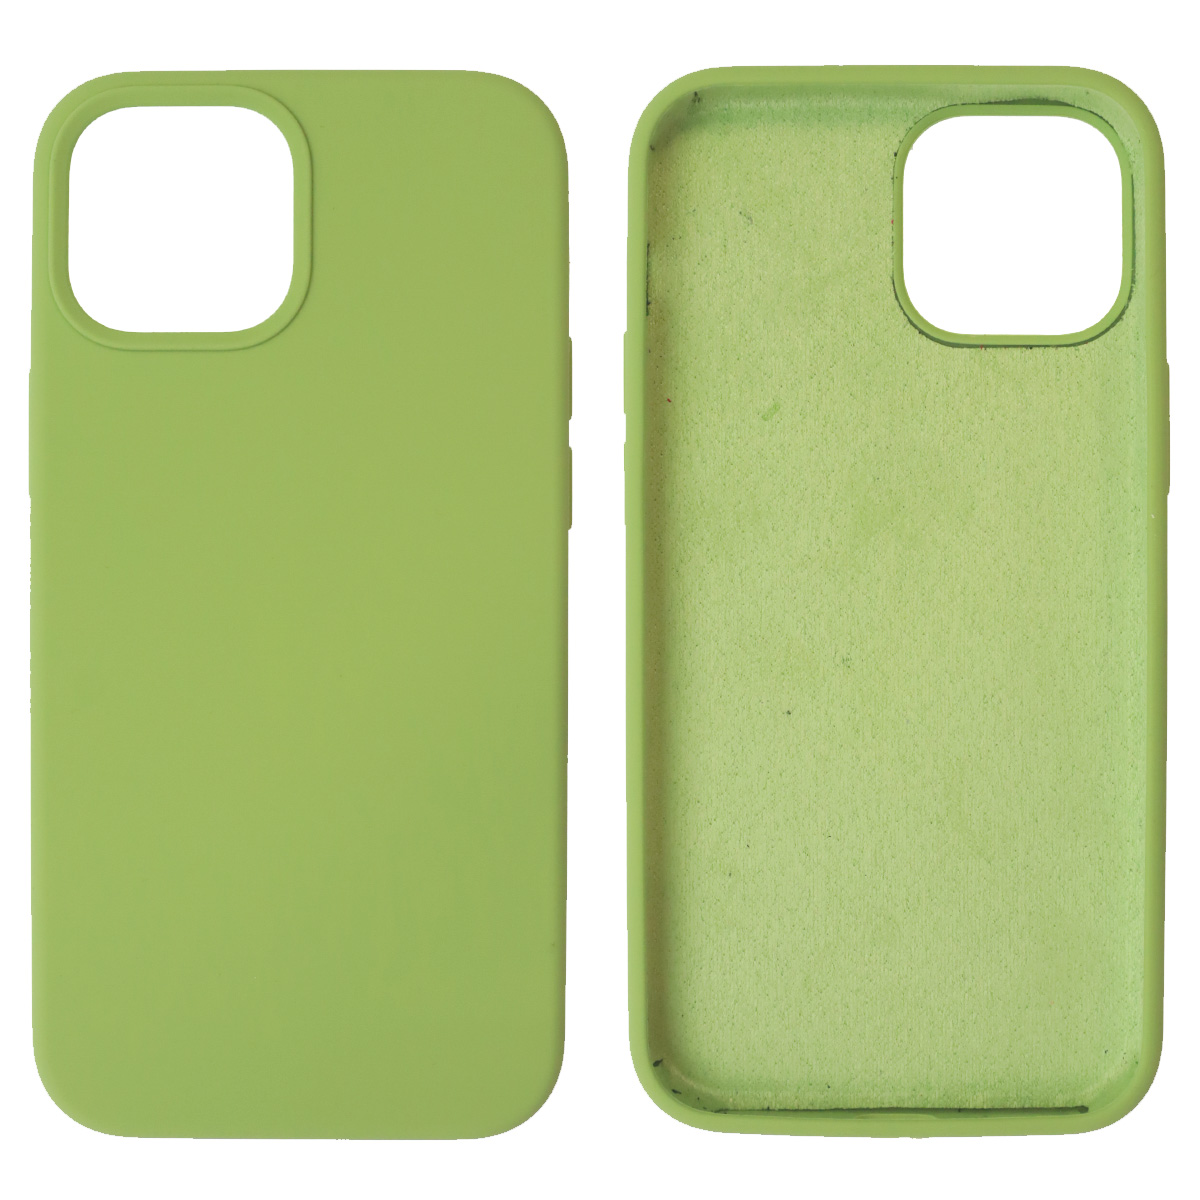 Чехол накладка Silicon Case для APPLE iPhone 13 mini (5.4), силикон, бархат, цвет фисташковый